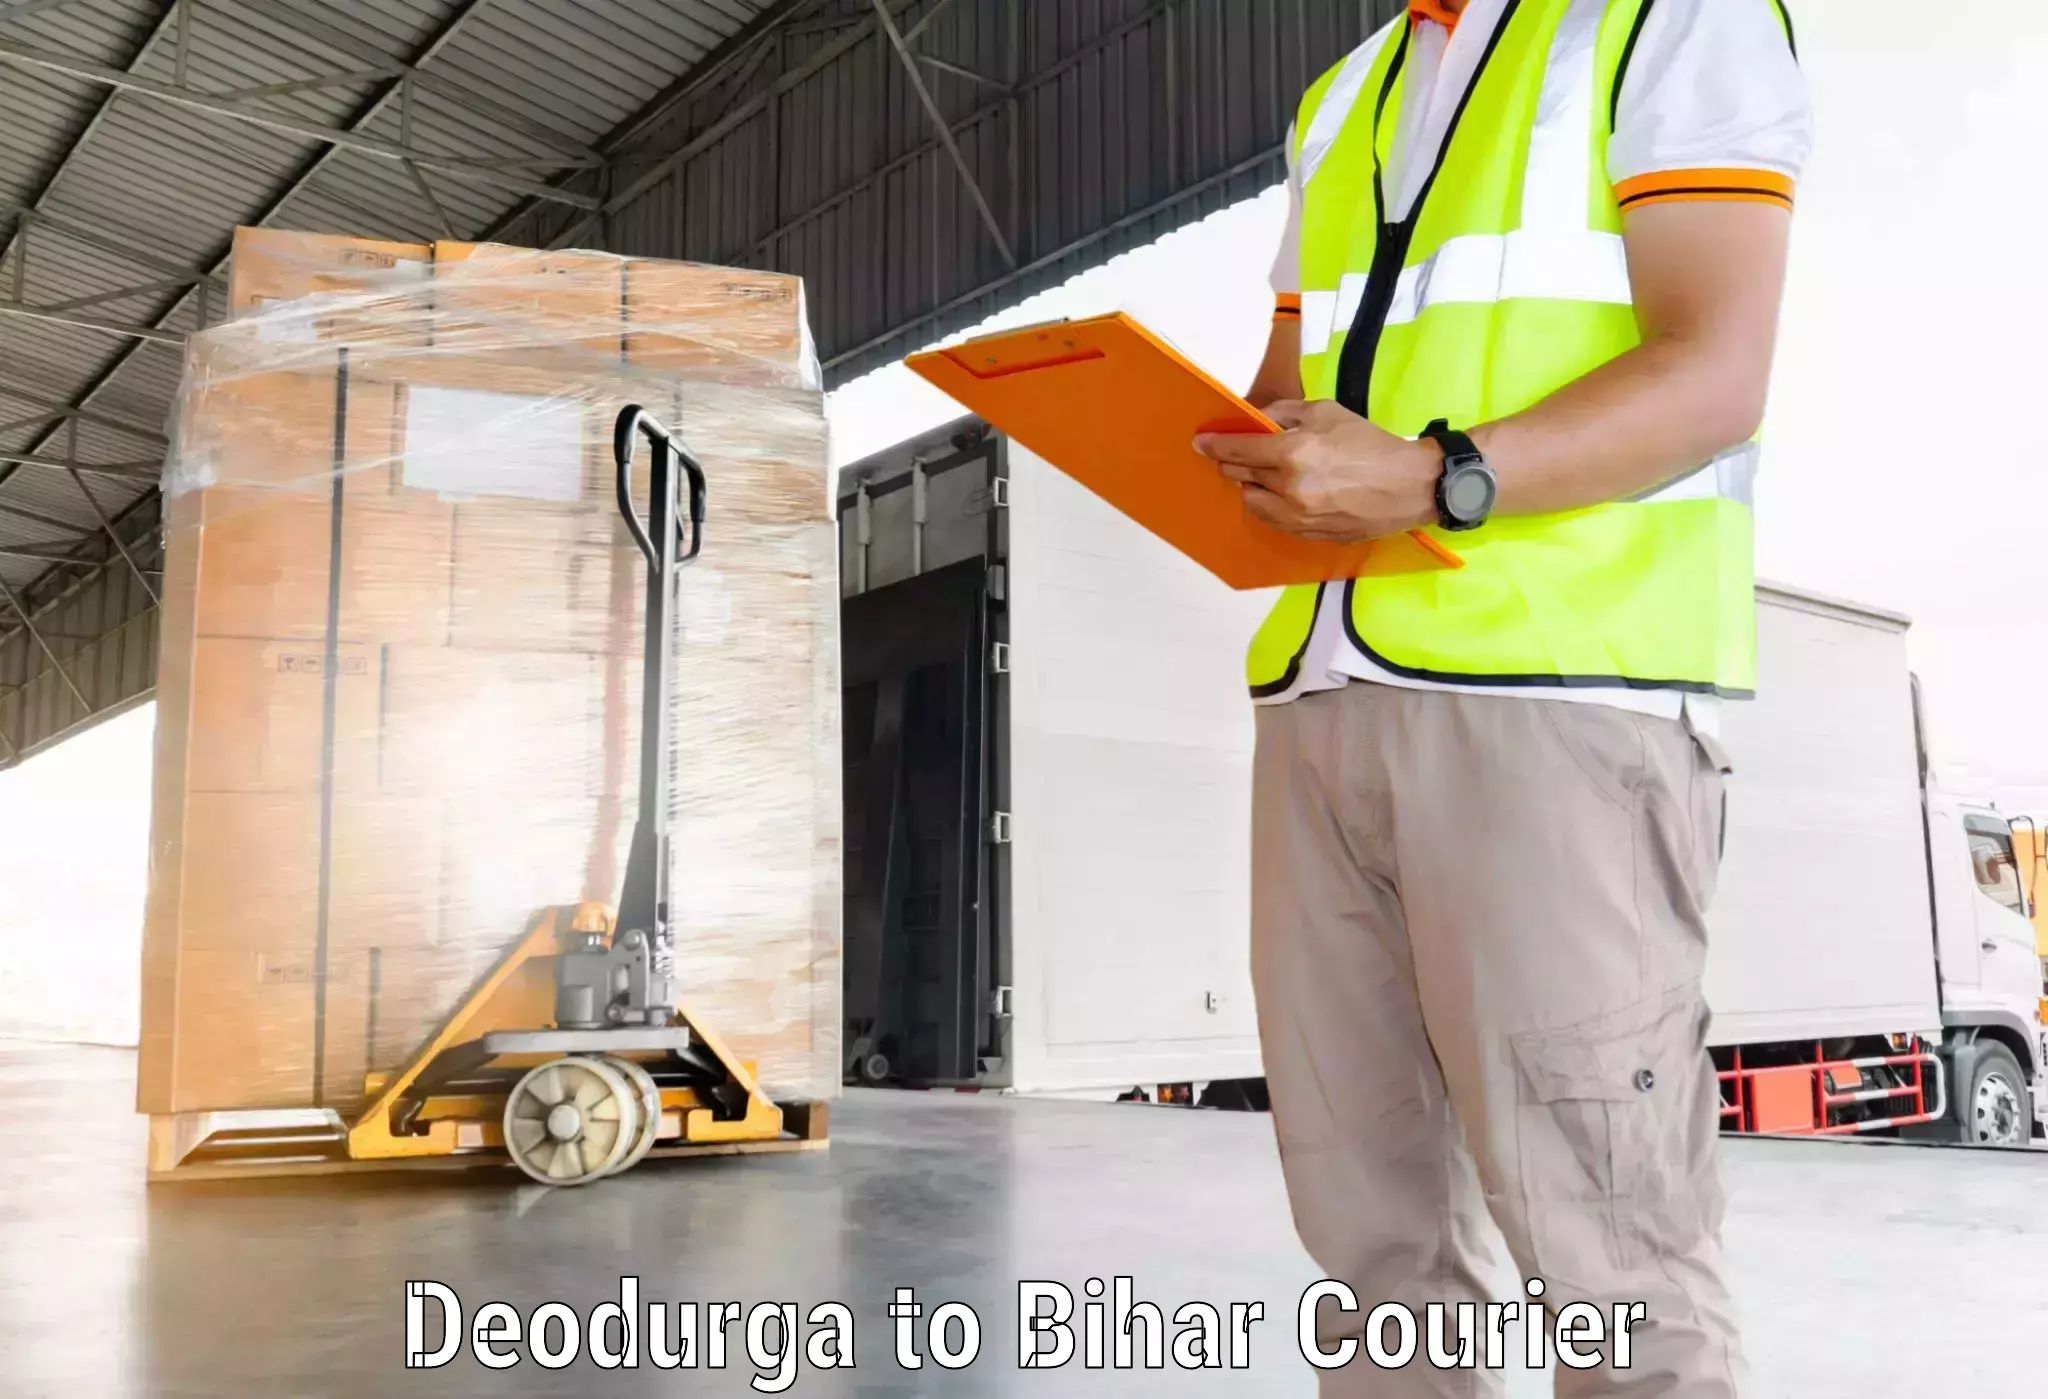 Global shipping solutions Deodurga to Munger